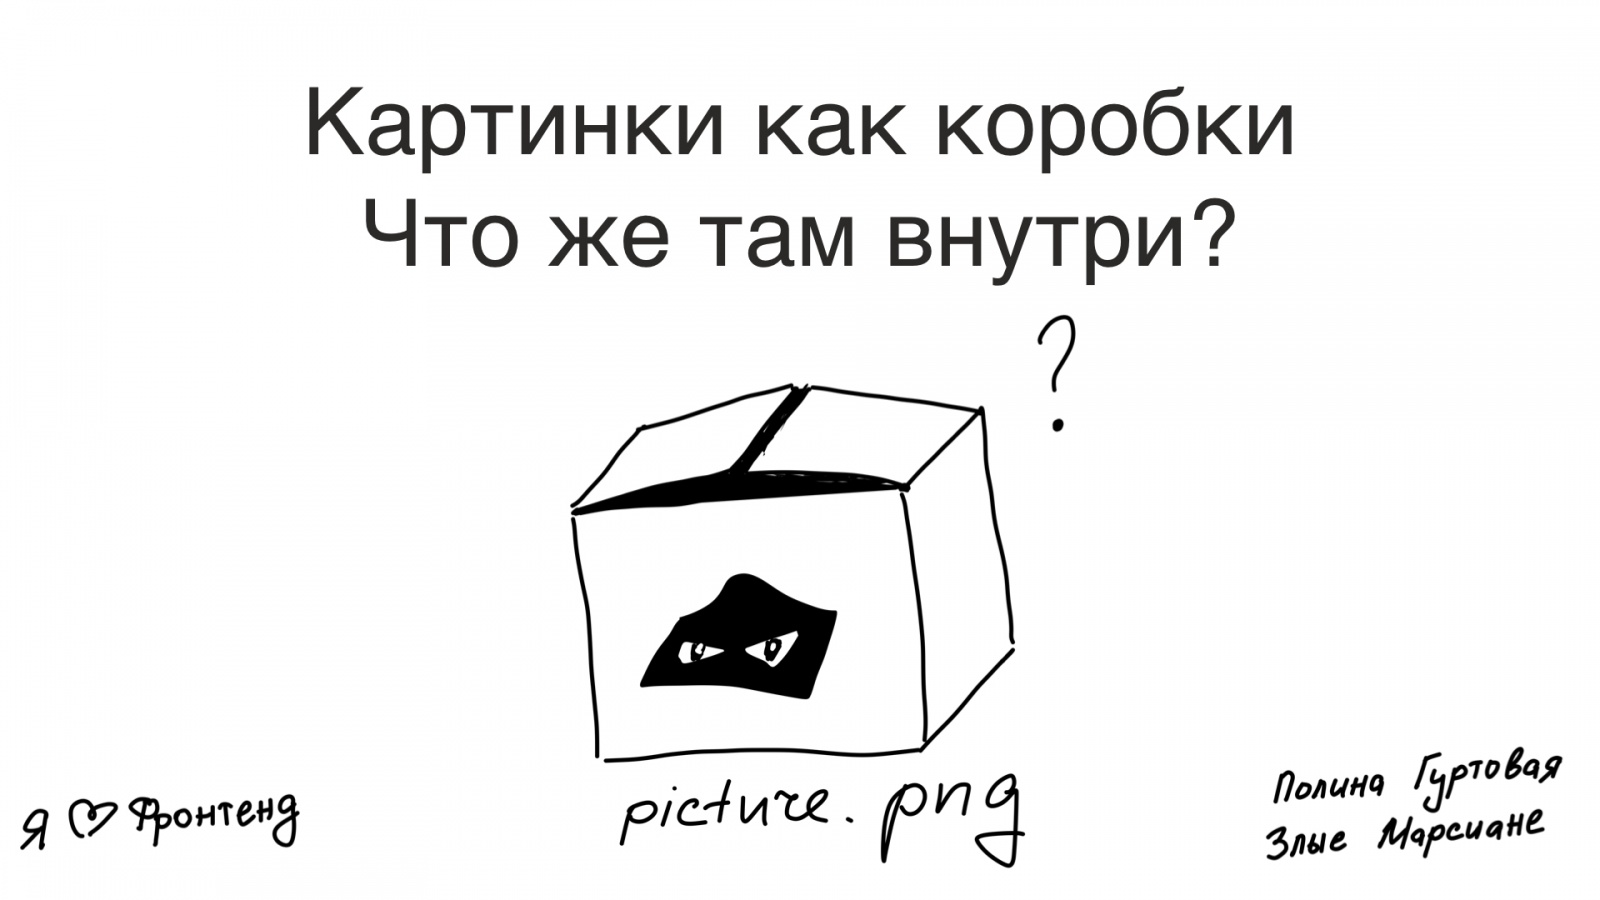 Картинки как коробки — что внутри? Доклад в Яндексе - 2